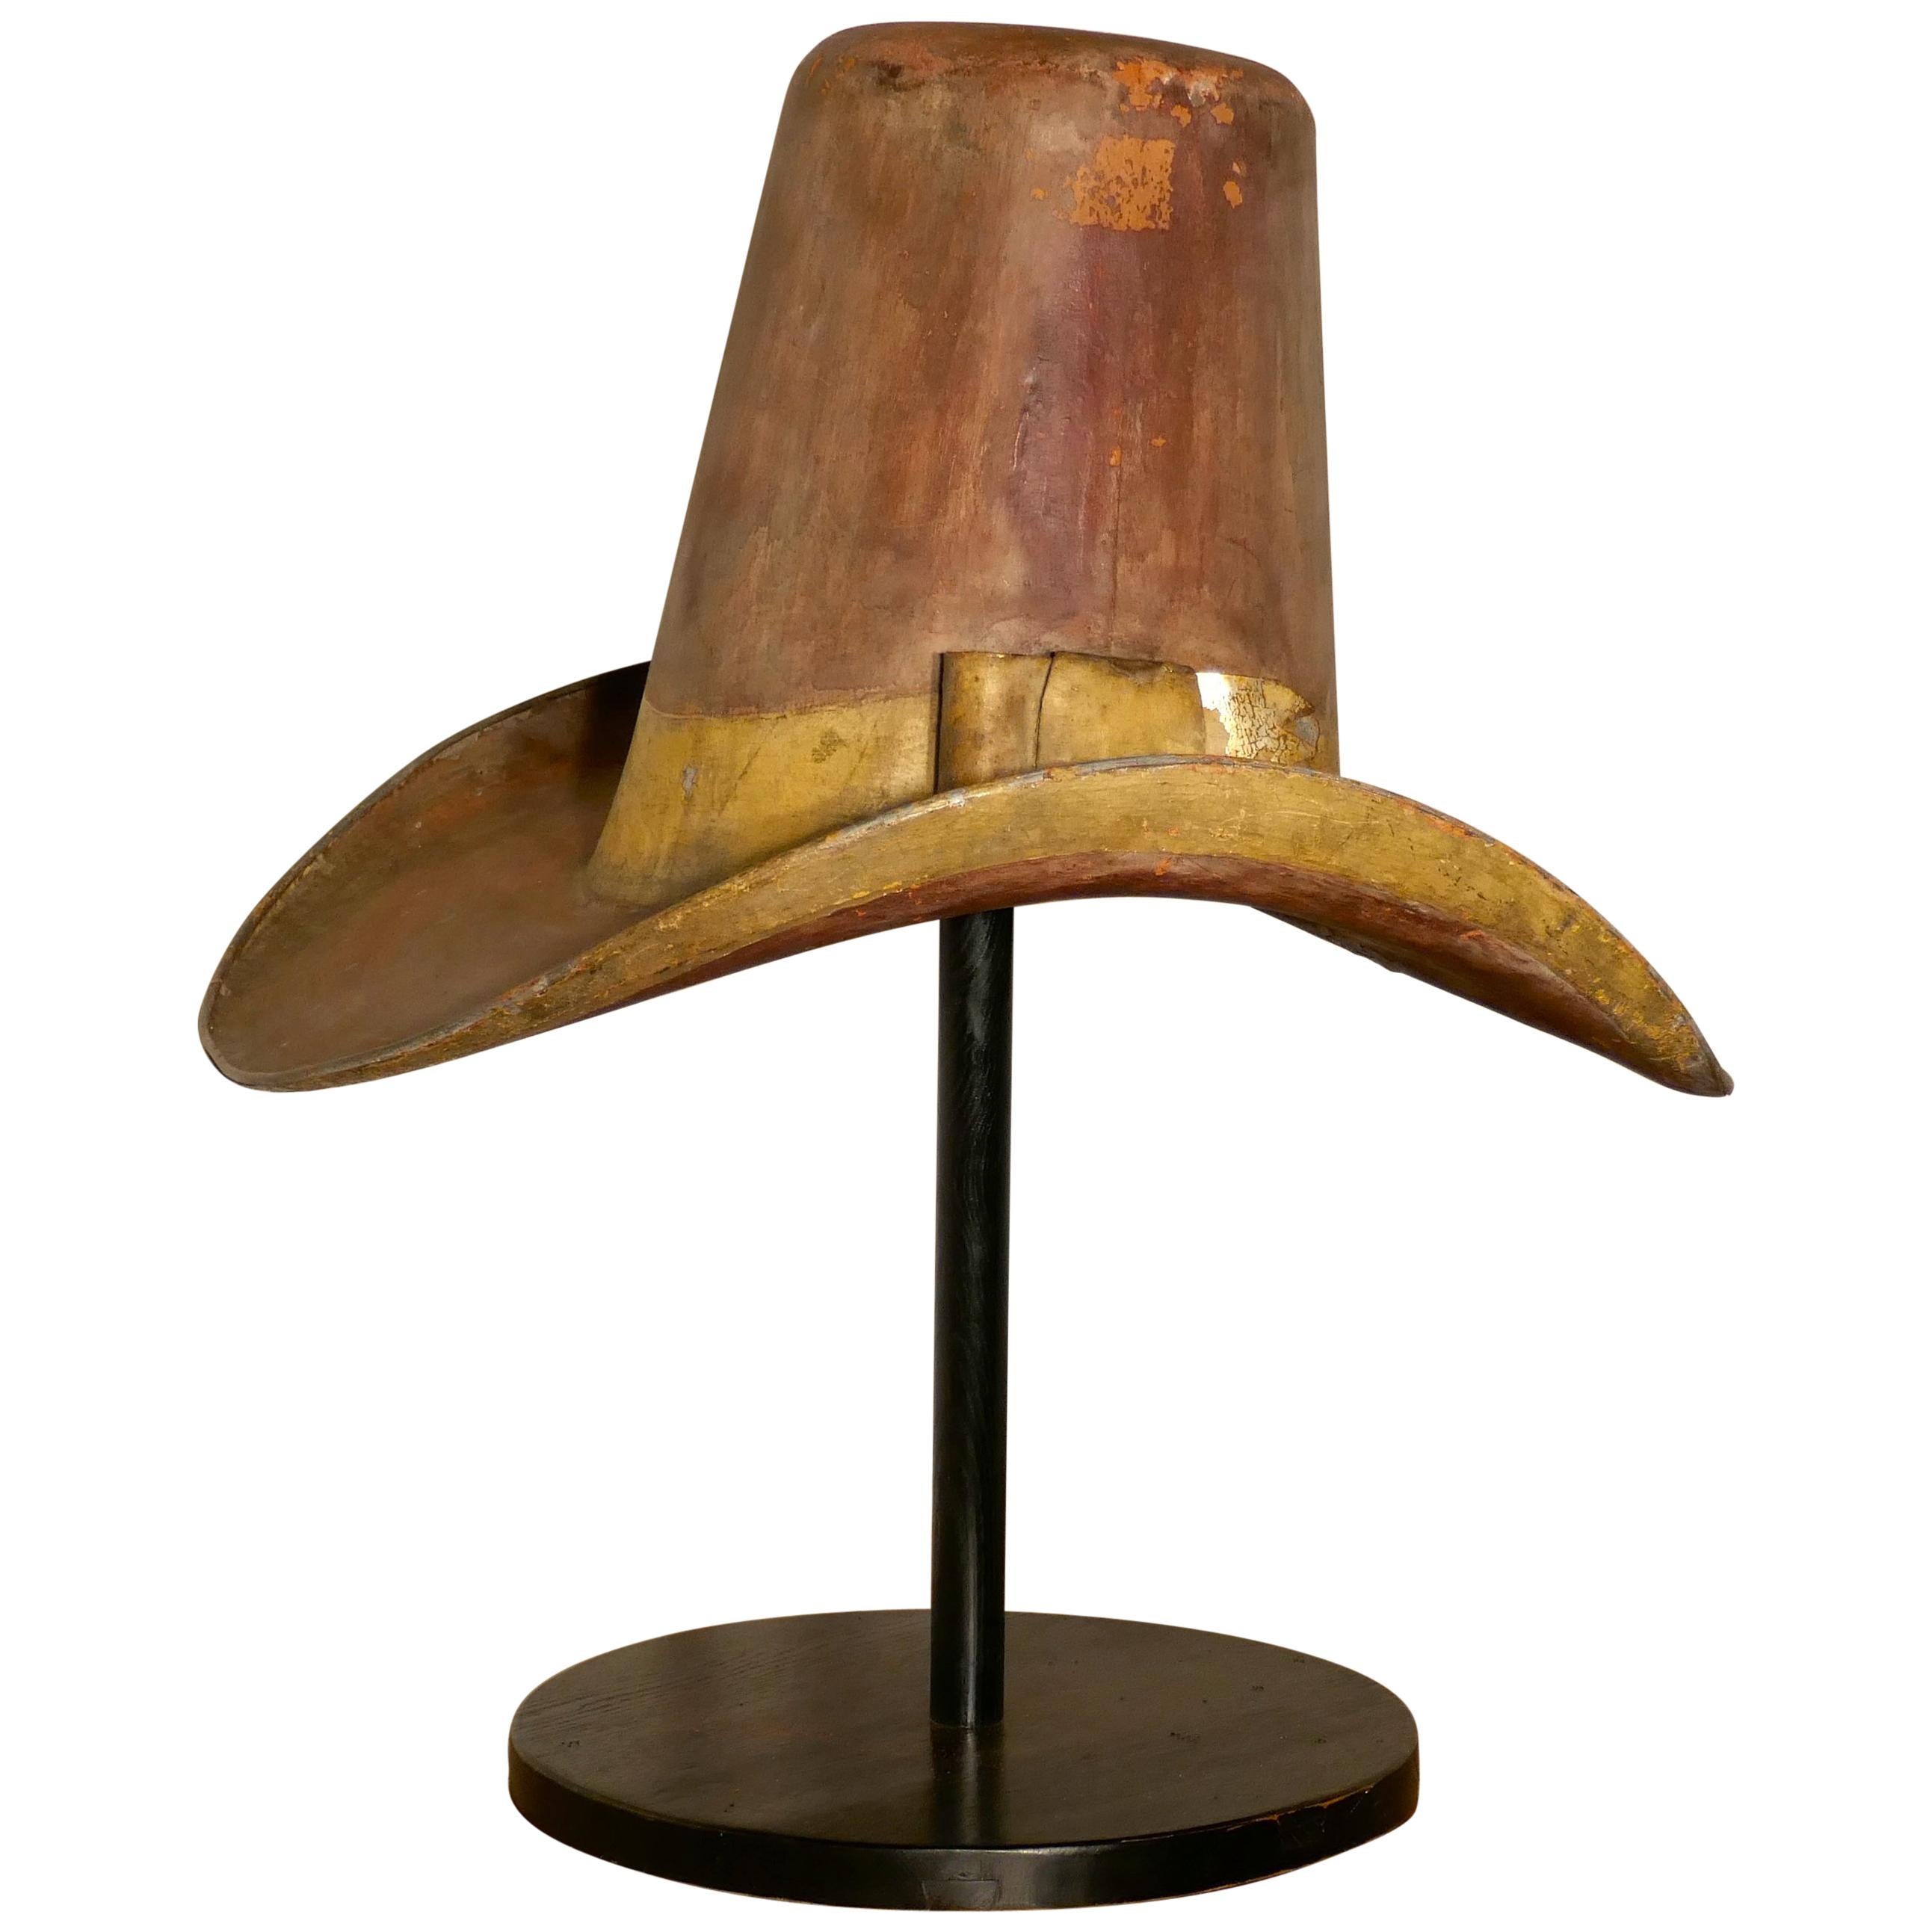 19th Century Giant American 10 Gallon Hat Original Shop Metal Trade Sign